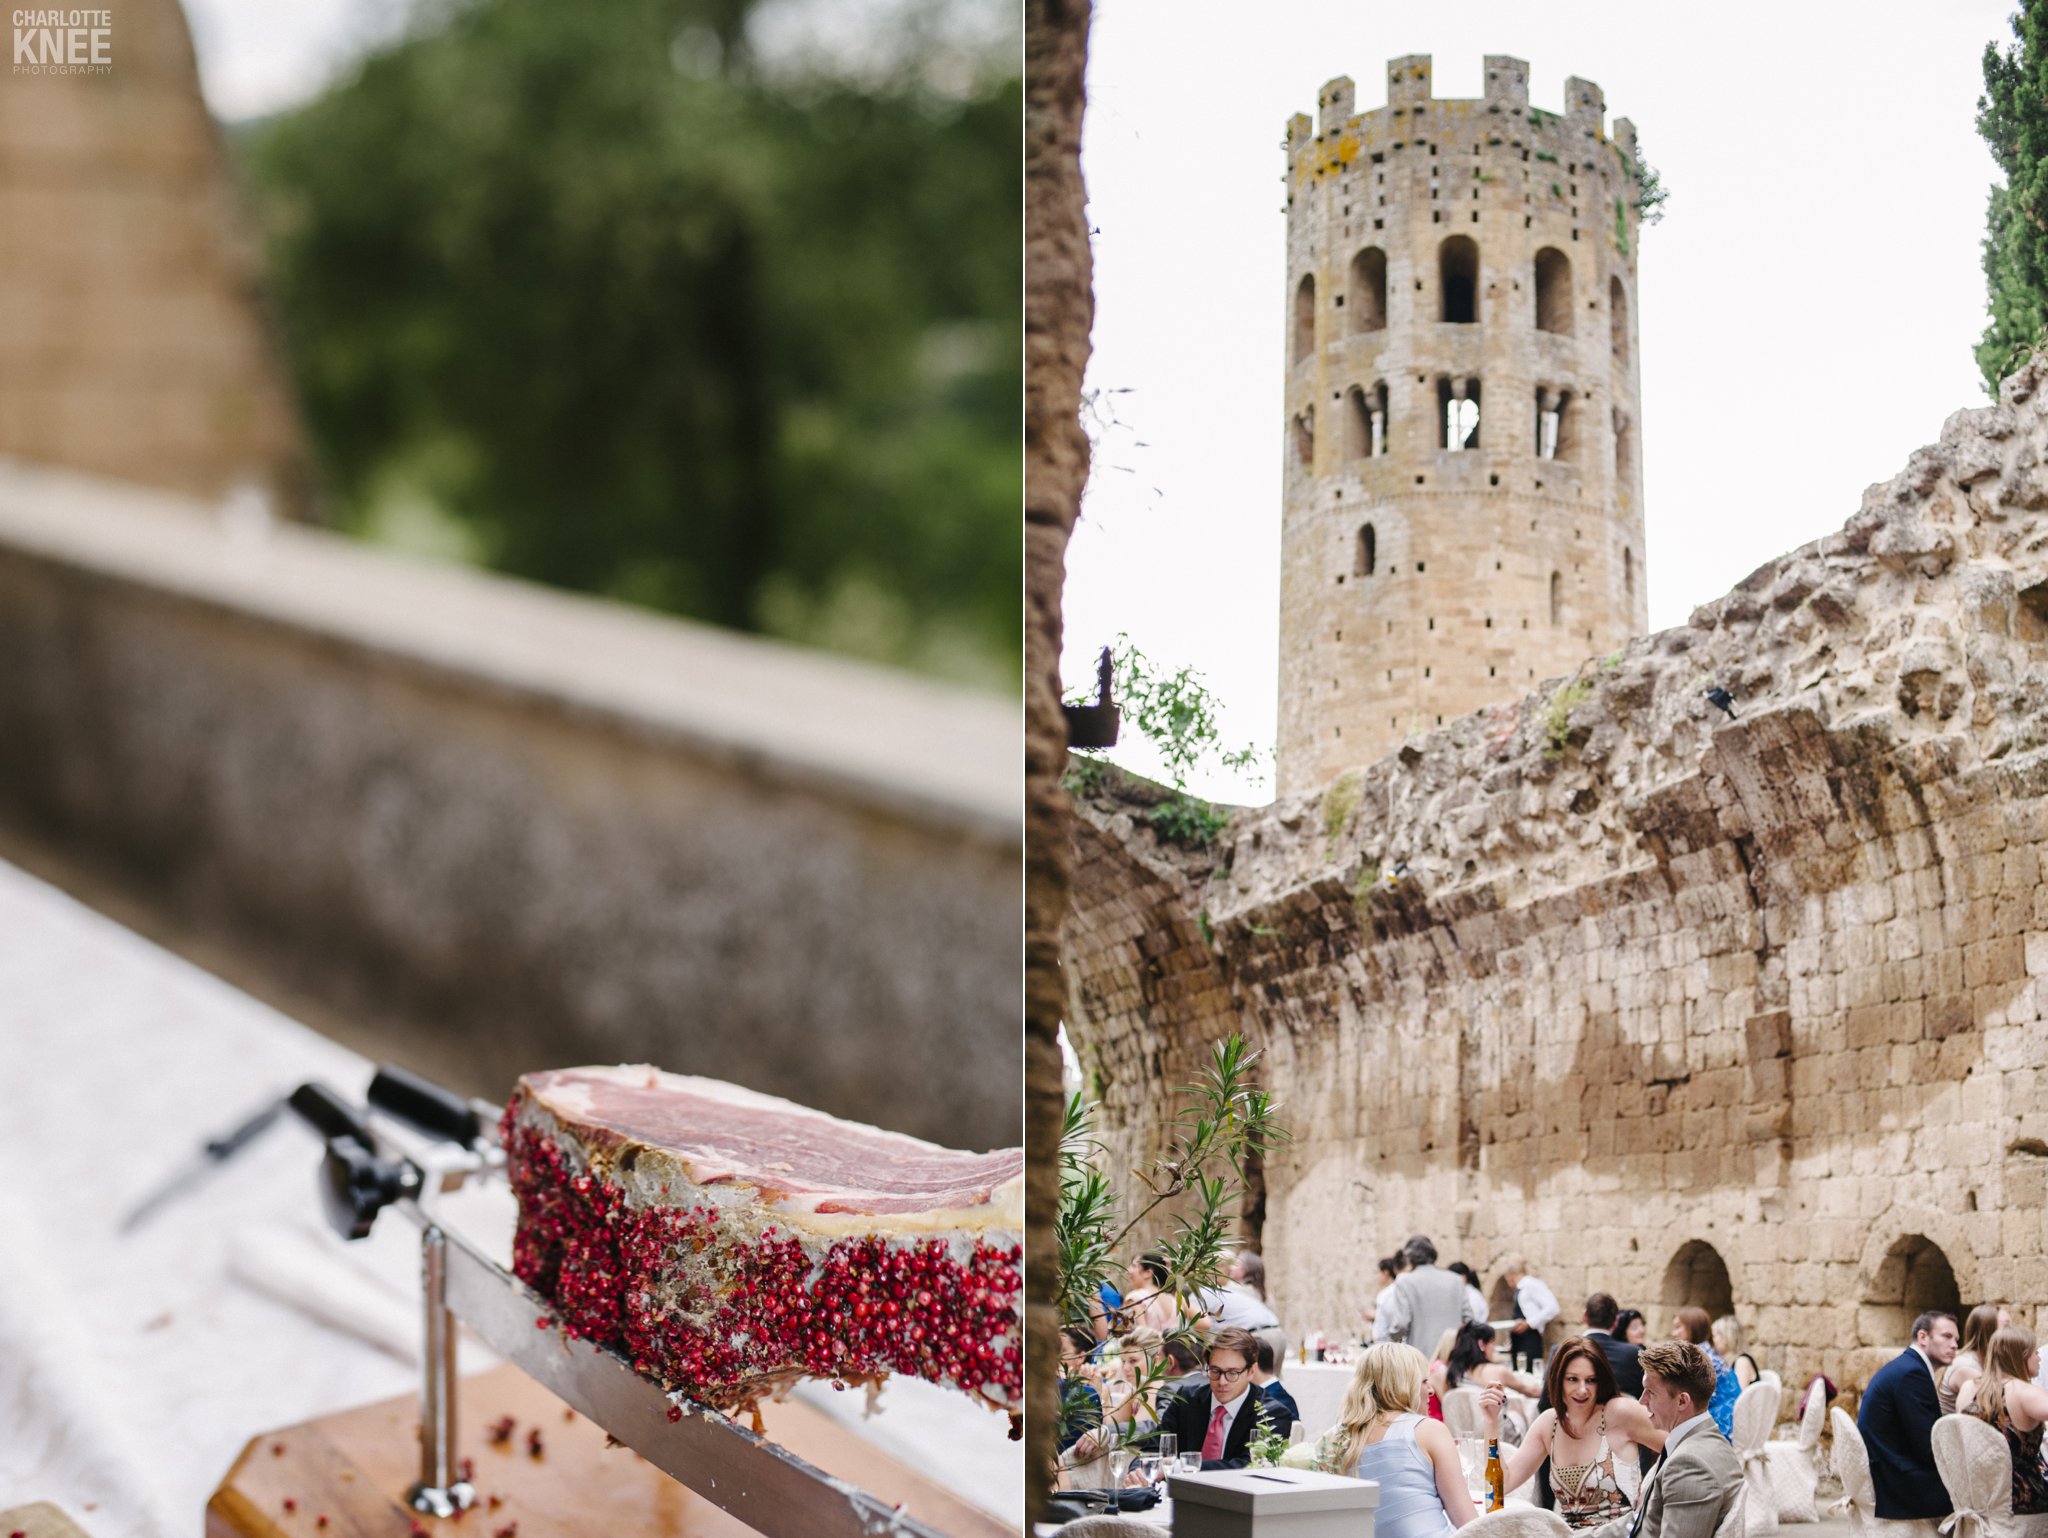 Destination-Wedding-La-Badia-di-Orvieto-Italy-Charlotte-Knee-Photography_0039.jpg